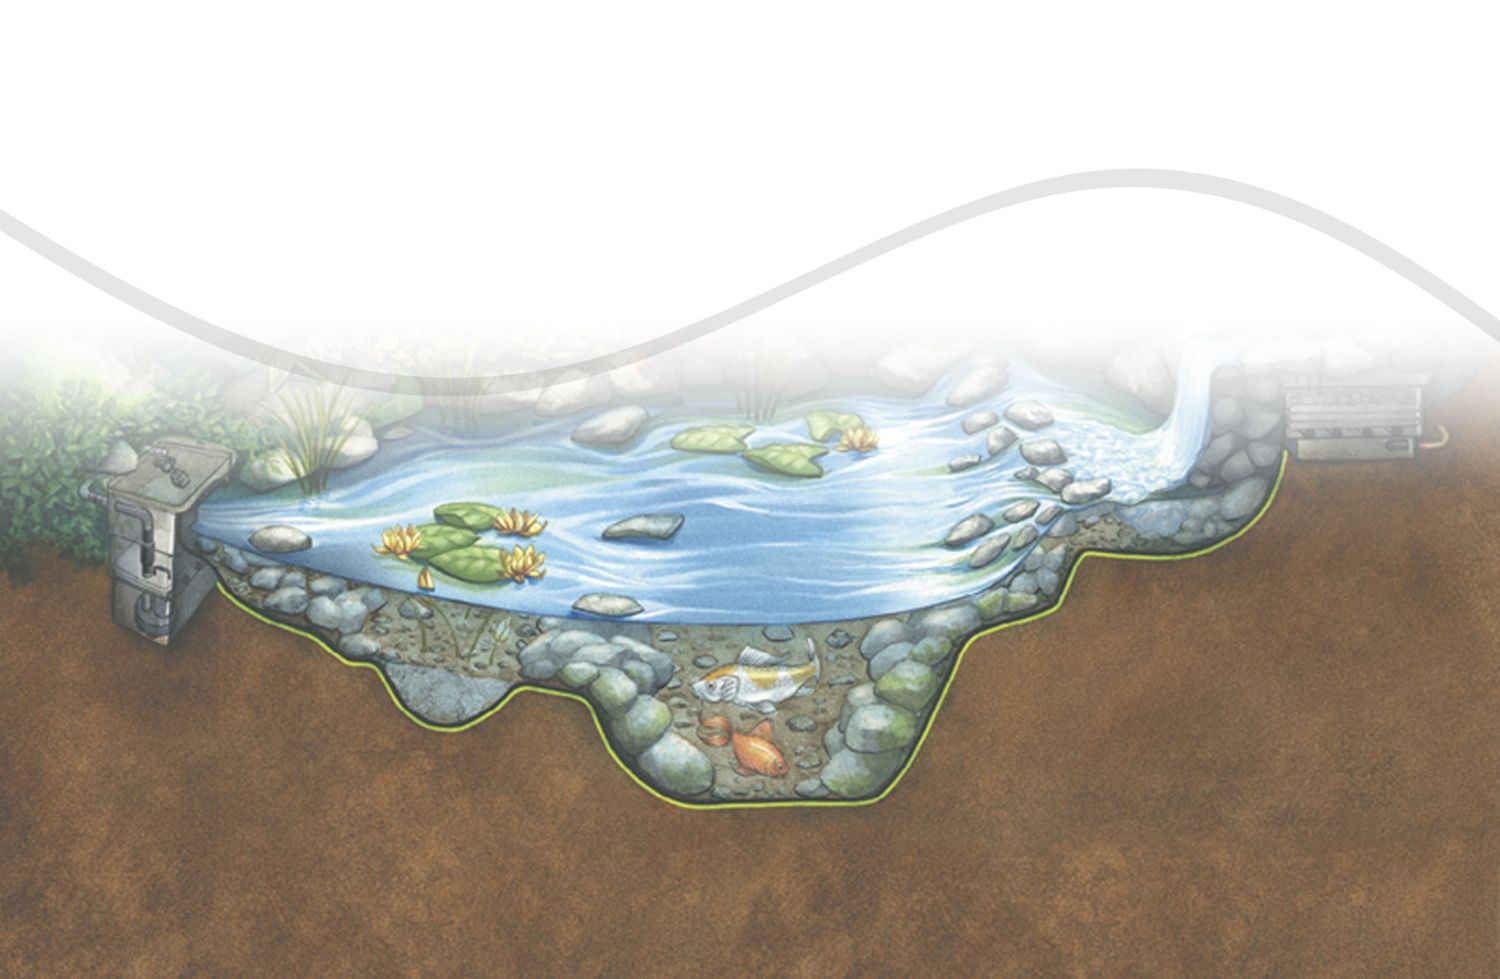 Ecosystem Wallpaper. Marine Ecosystem